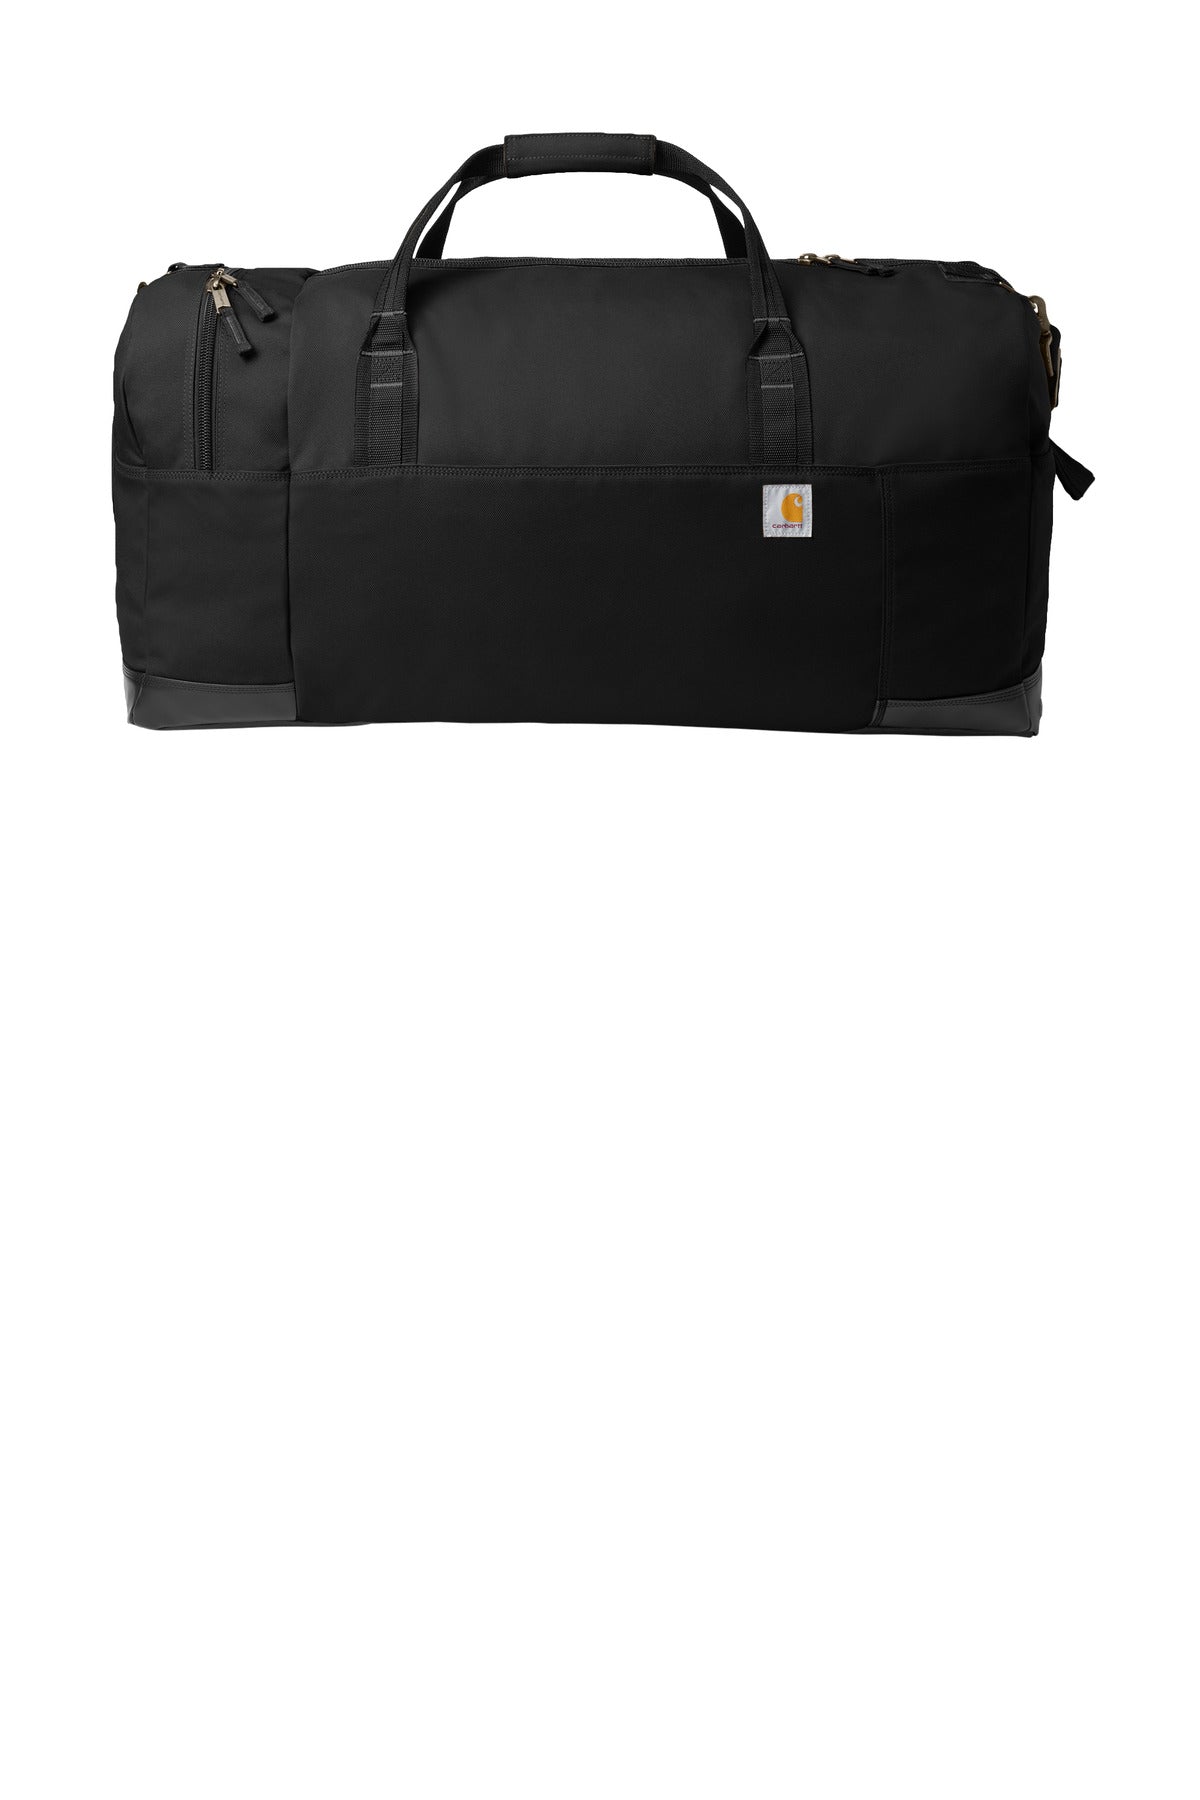 Photo of Carhartt Bags CTB0000487  color  Black